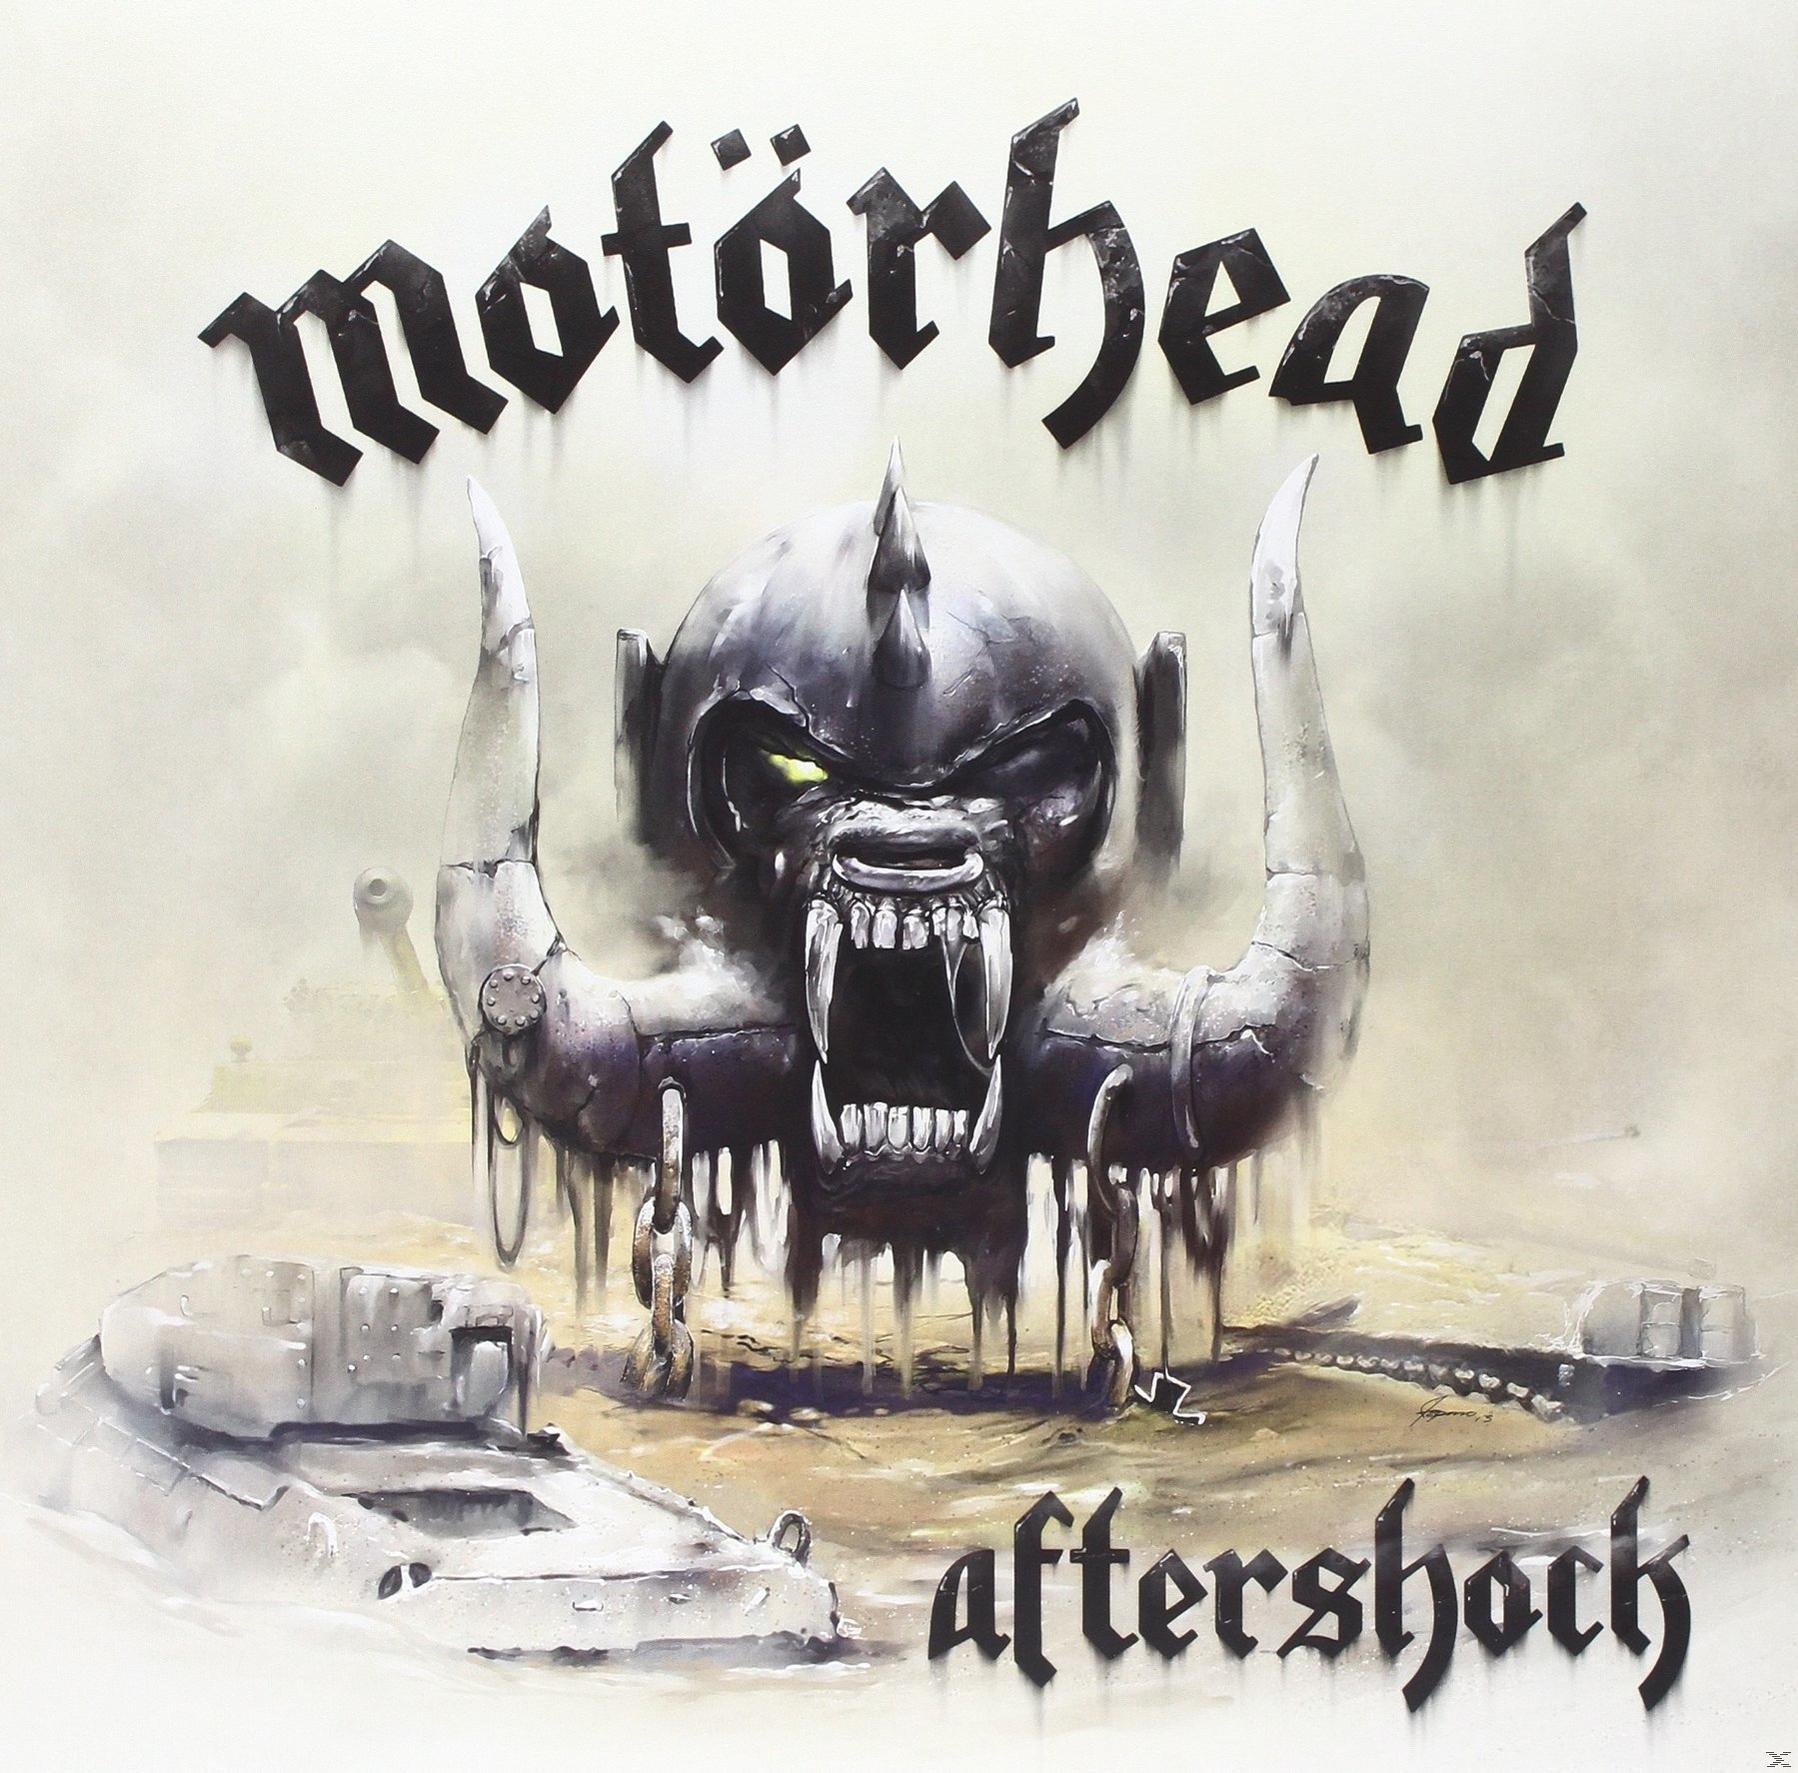 Rsd [Vinyl - (Vinyl) Motörhead Lp] Aftershock -